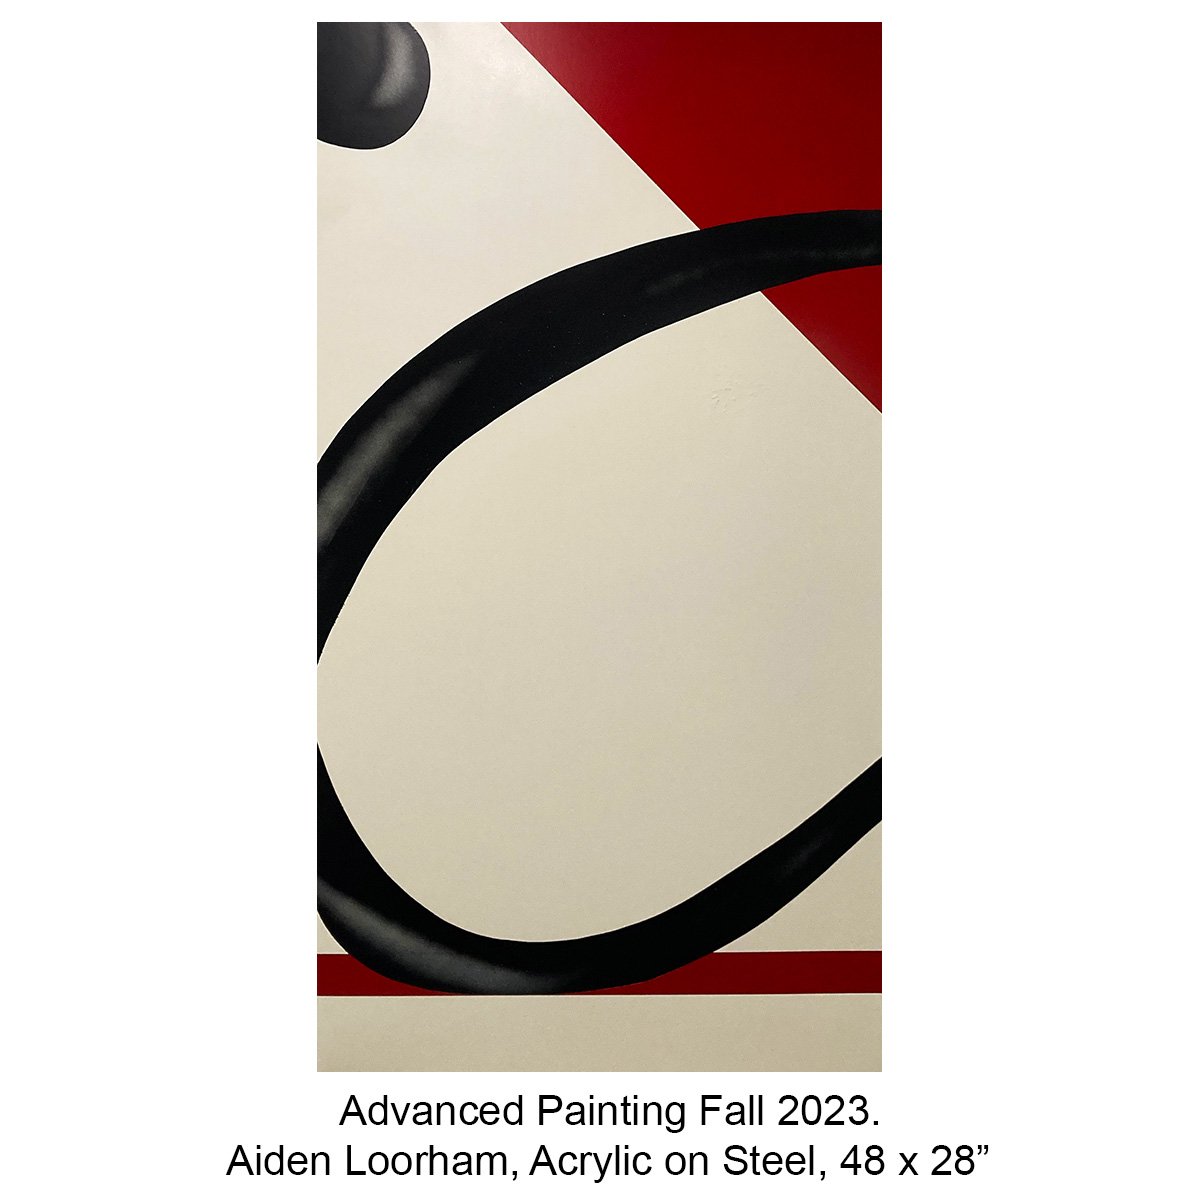 Advanced Painting Fall 2023. Aiden Loorham, Acrylic on Steel, 48 x 28” copy.jpg